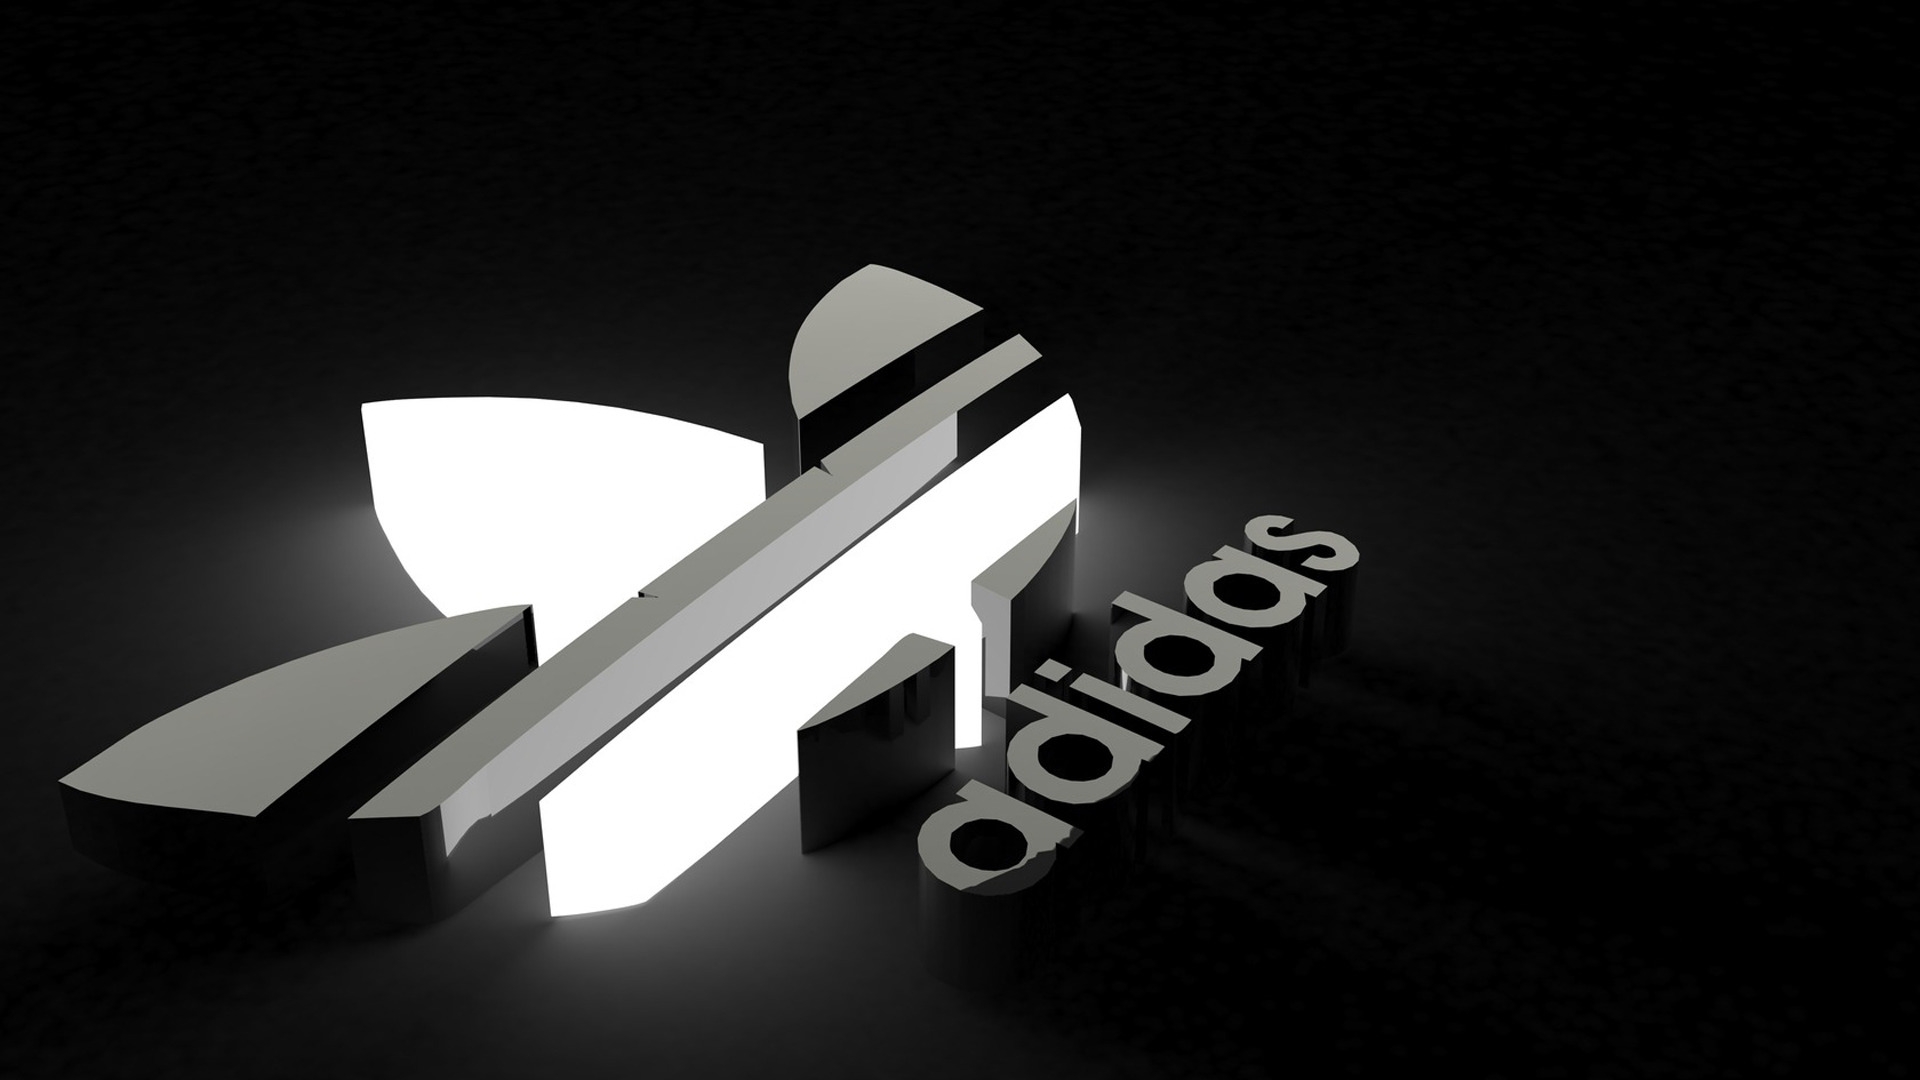 Adidas Black & White Logo for 1920 x 1080 HDTV 1080p resolution